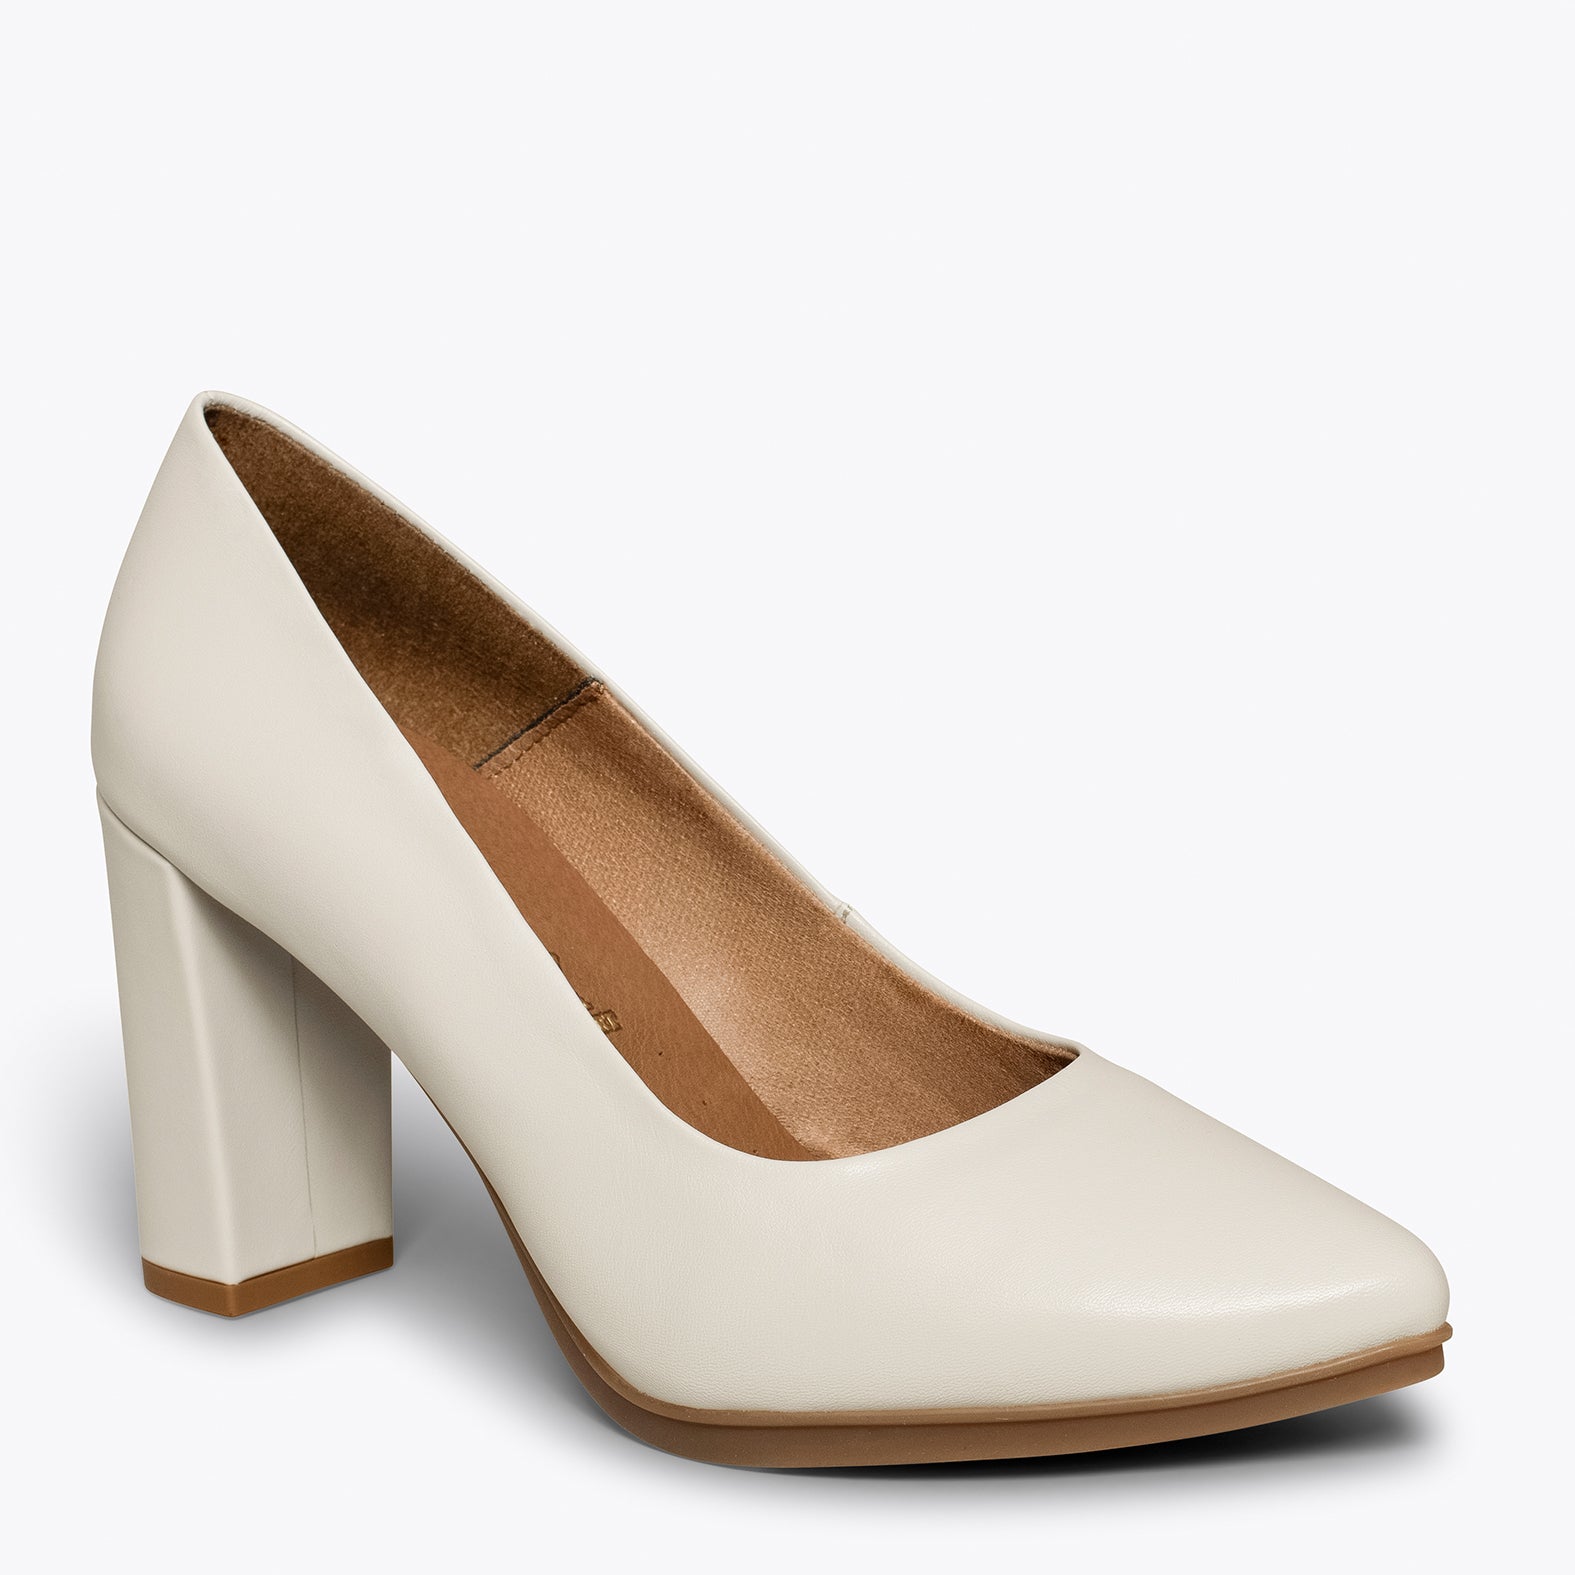 URBAN SALON – WHITE nappa leather high heel